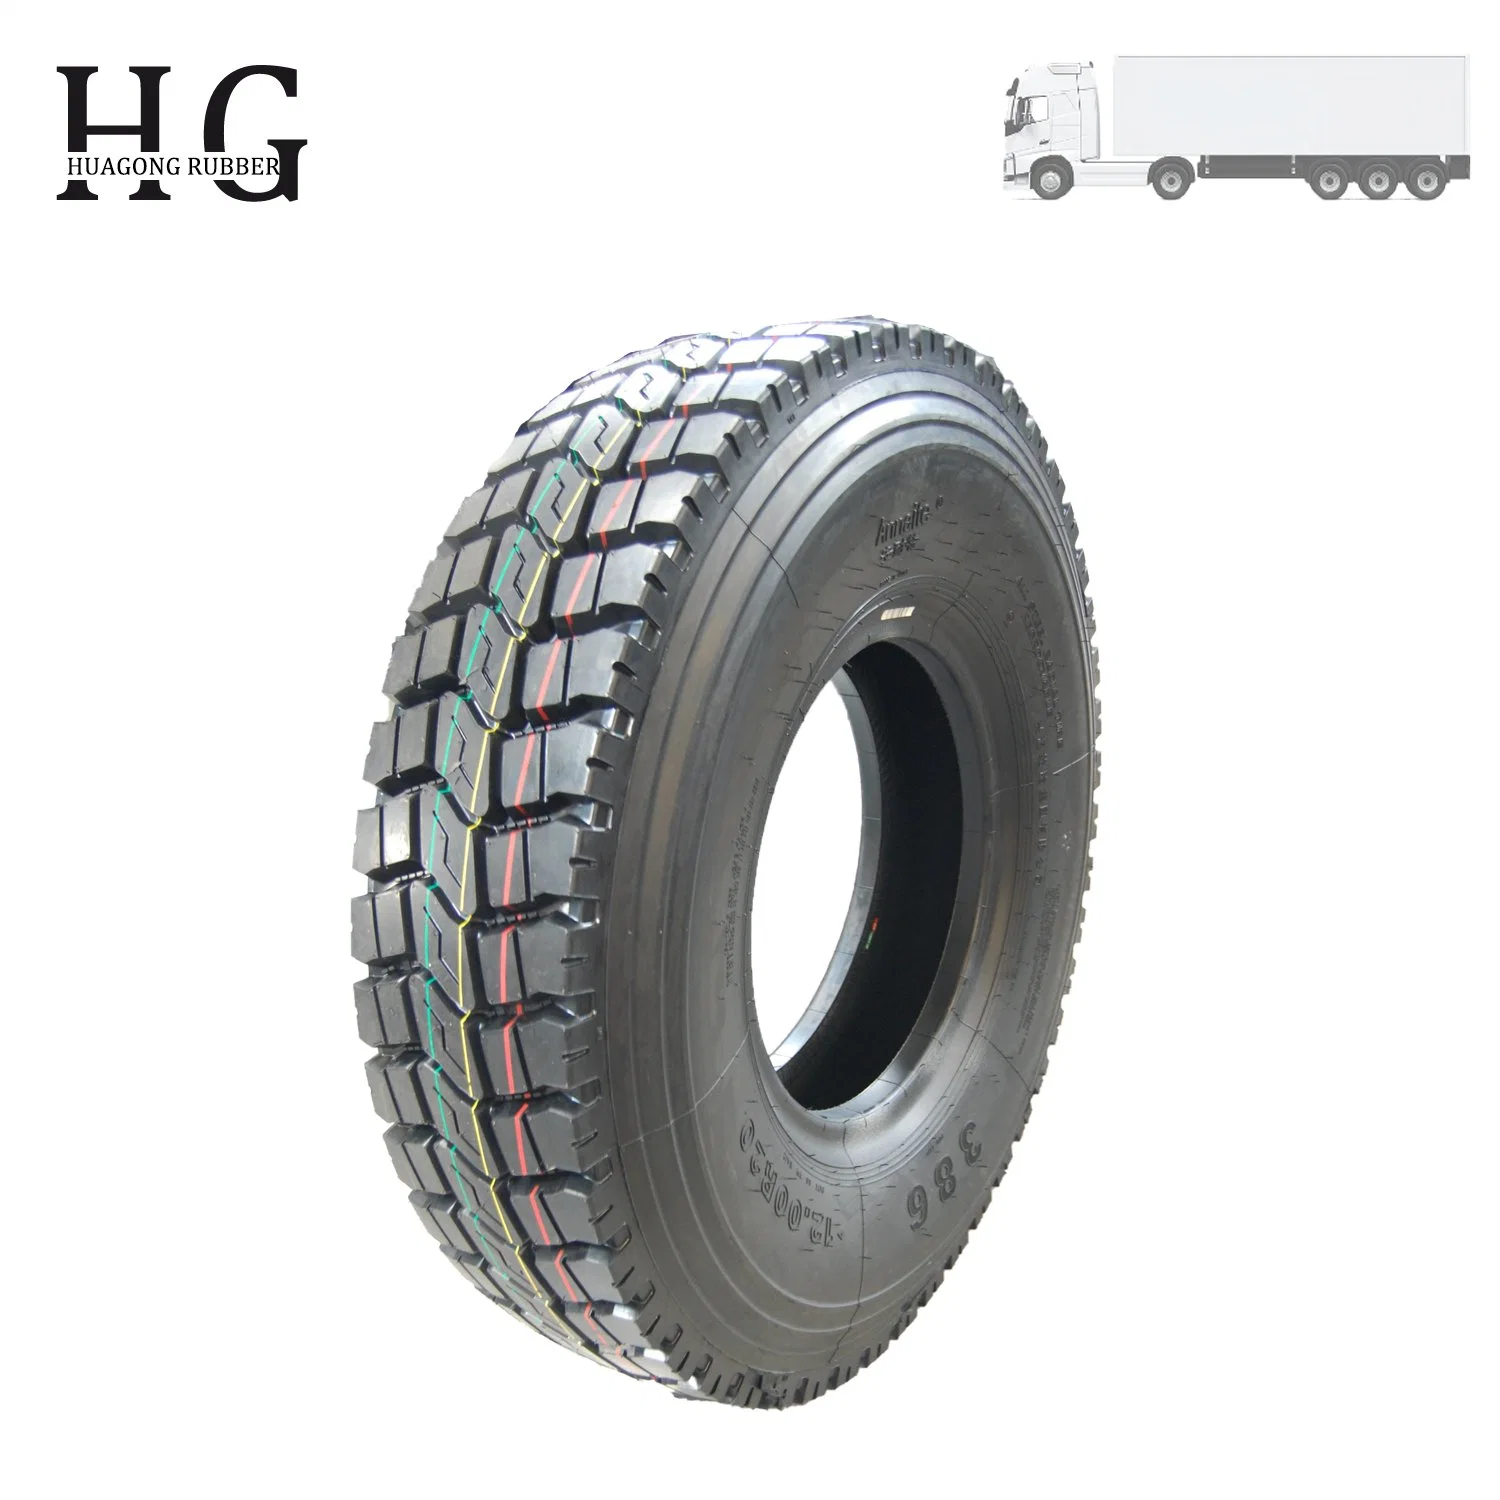 China Wholesale Radial Truck Tires, Bus Tires, TBR Tires, Automobile Tires, Passenger Car Tires, OTR Tires